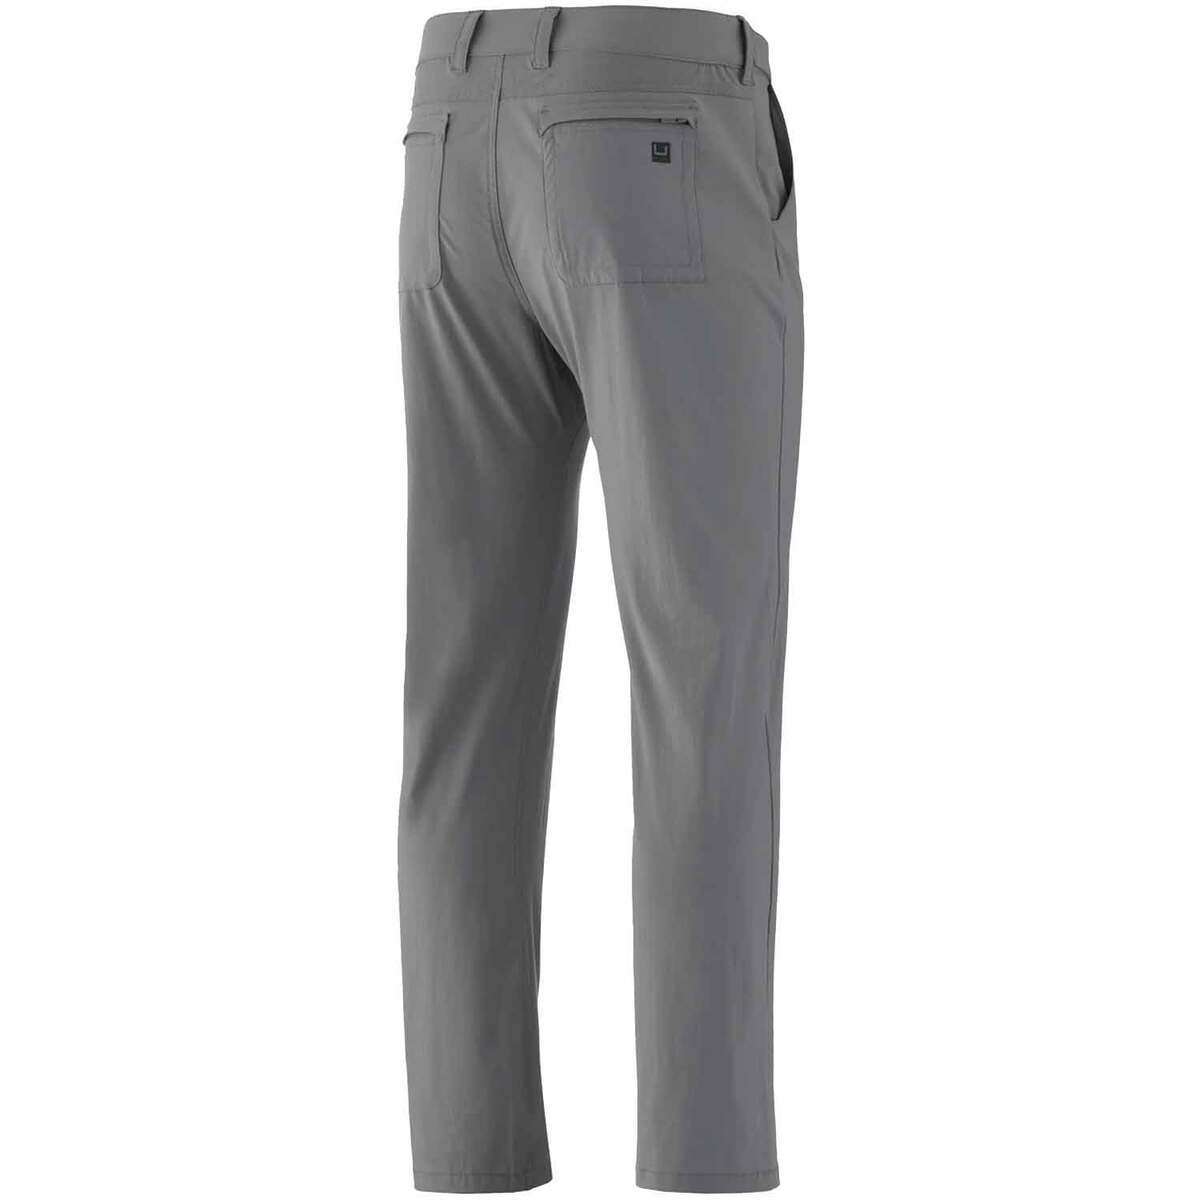 Huk Men's Next Level Fishing Pants - Overcast Grey - XL - Overcast Grey ...